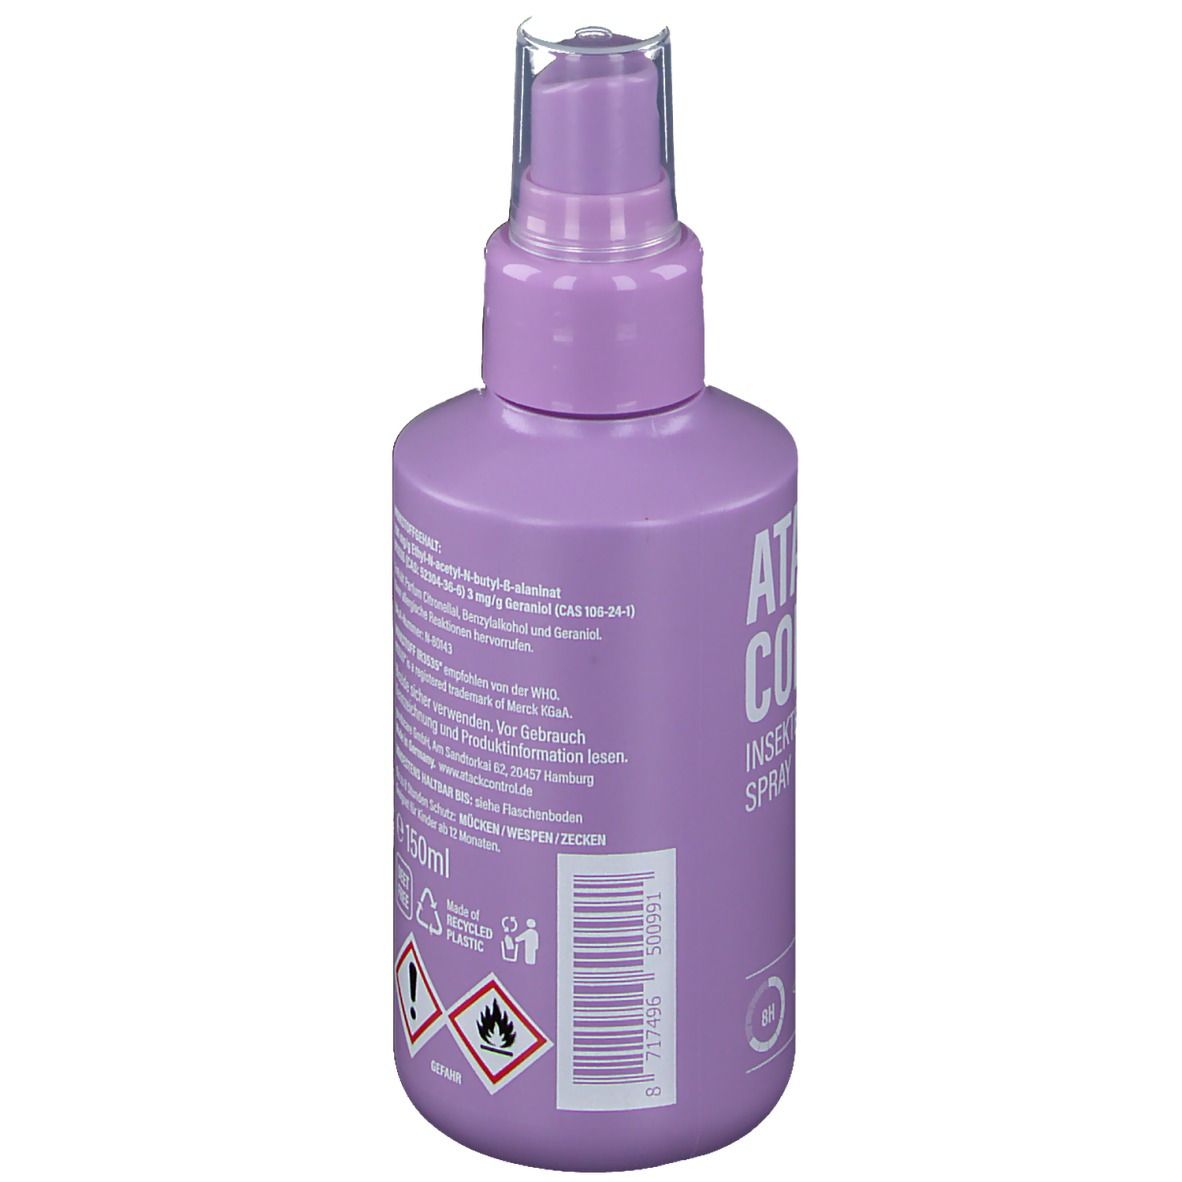 ATACK Control® Insektenschutz Spray